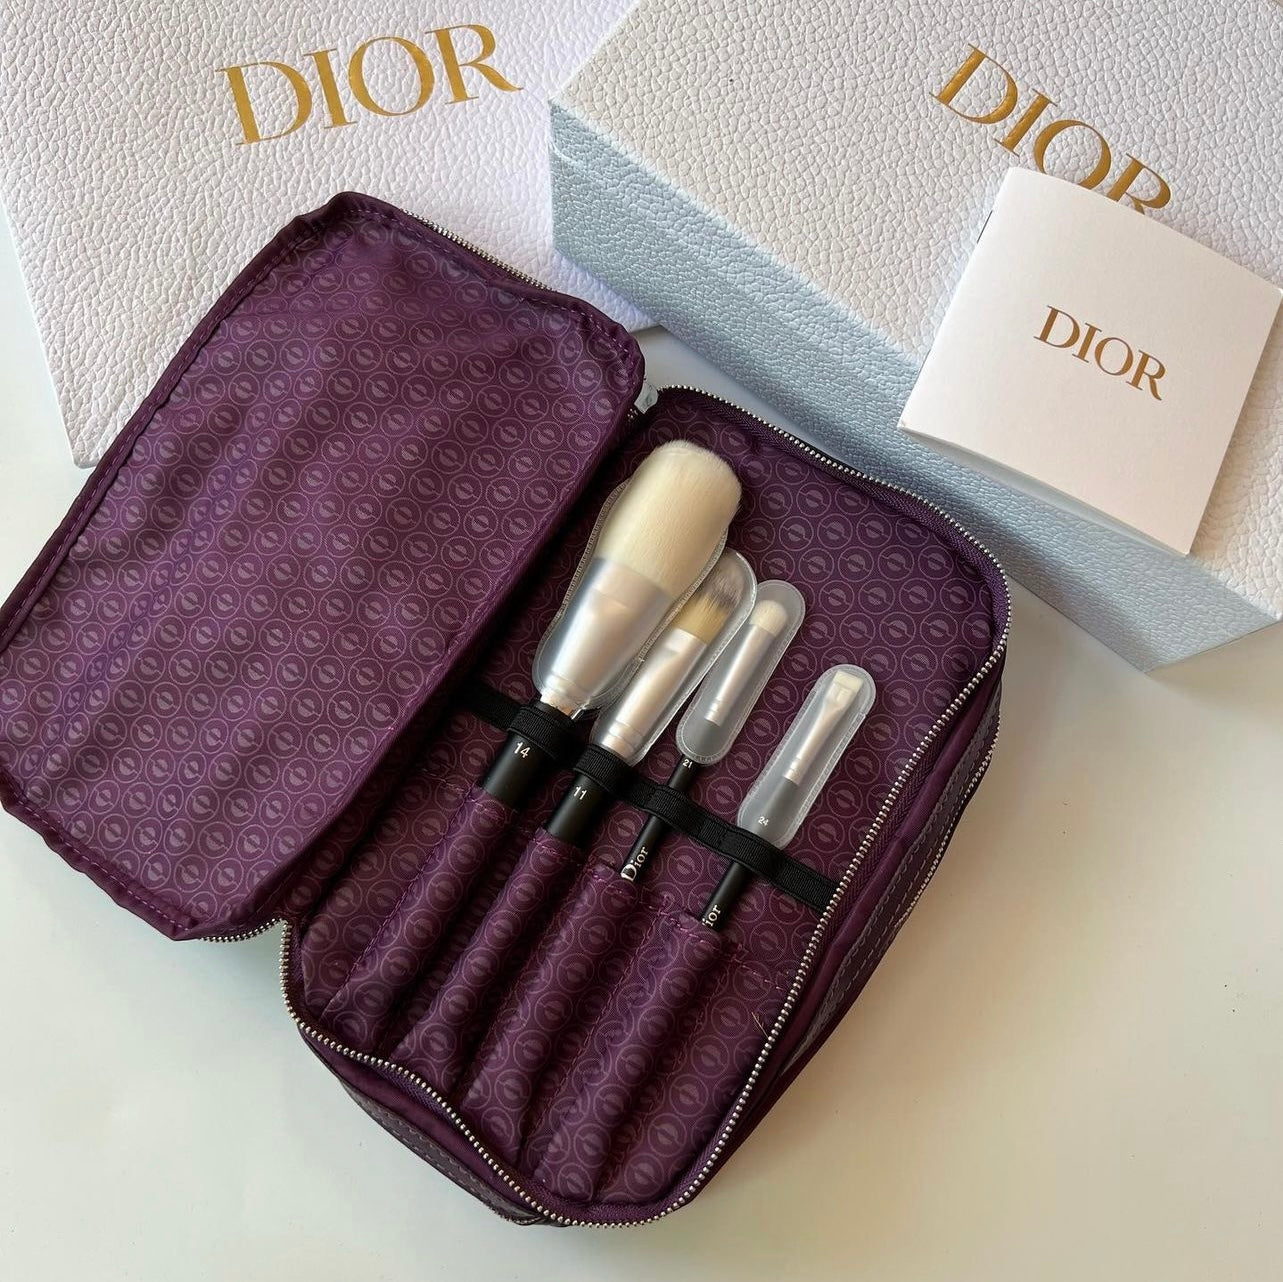 Dior Backstage Makeup Brush Set With